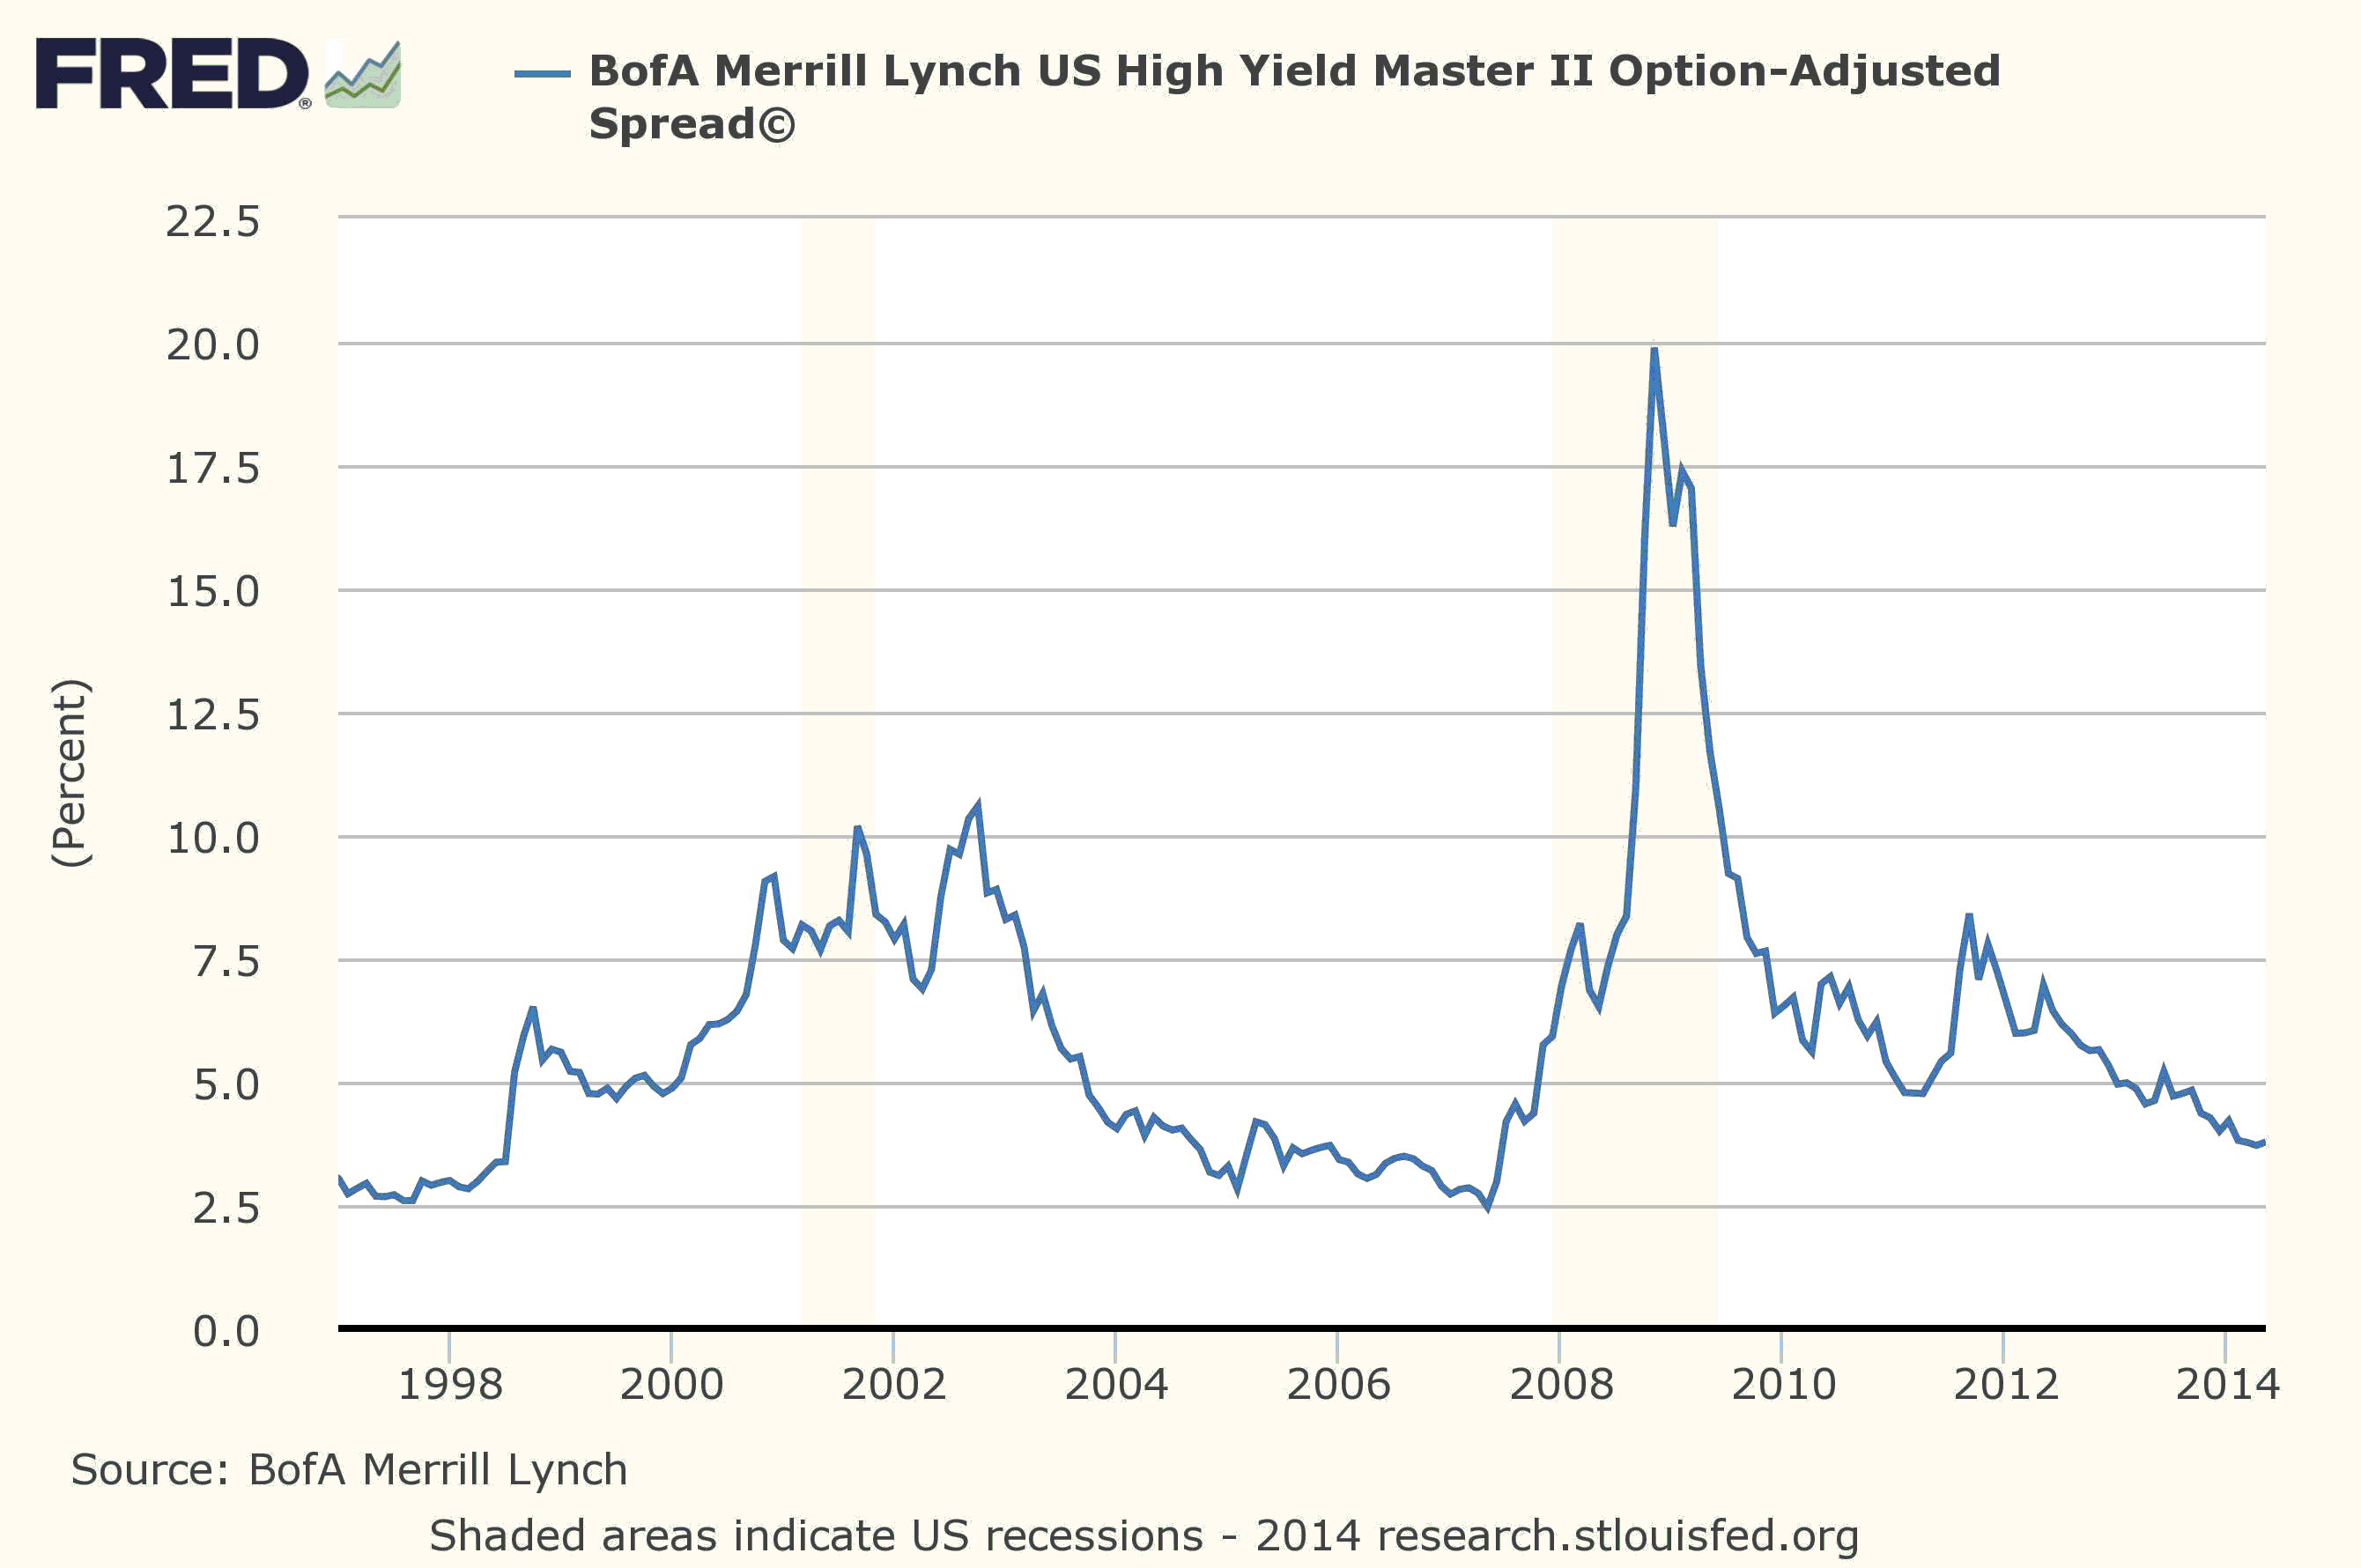 BofA Merrill Lynch US High Yield Master II Option-Adjusted Spread